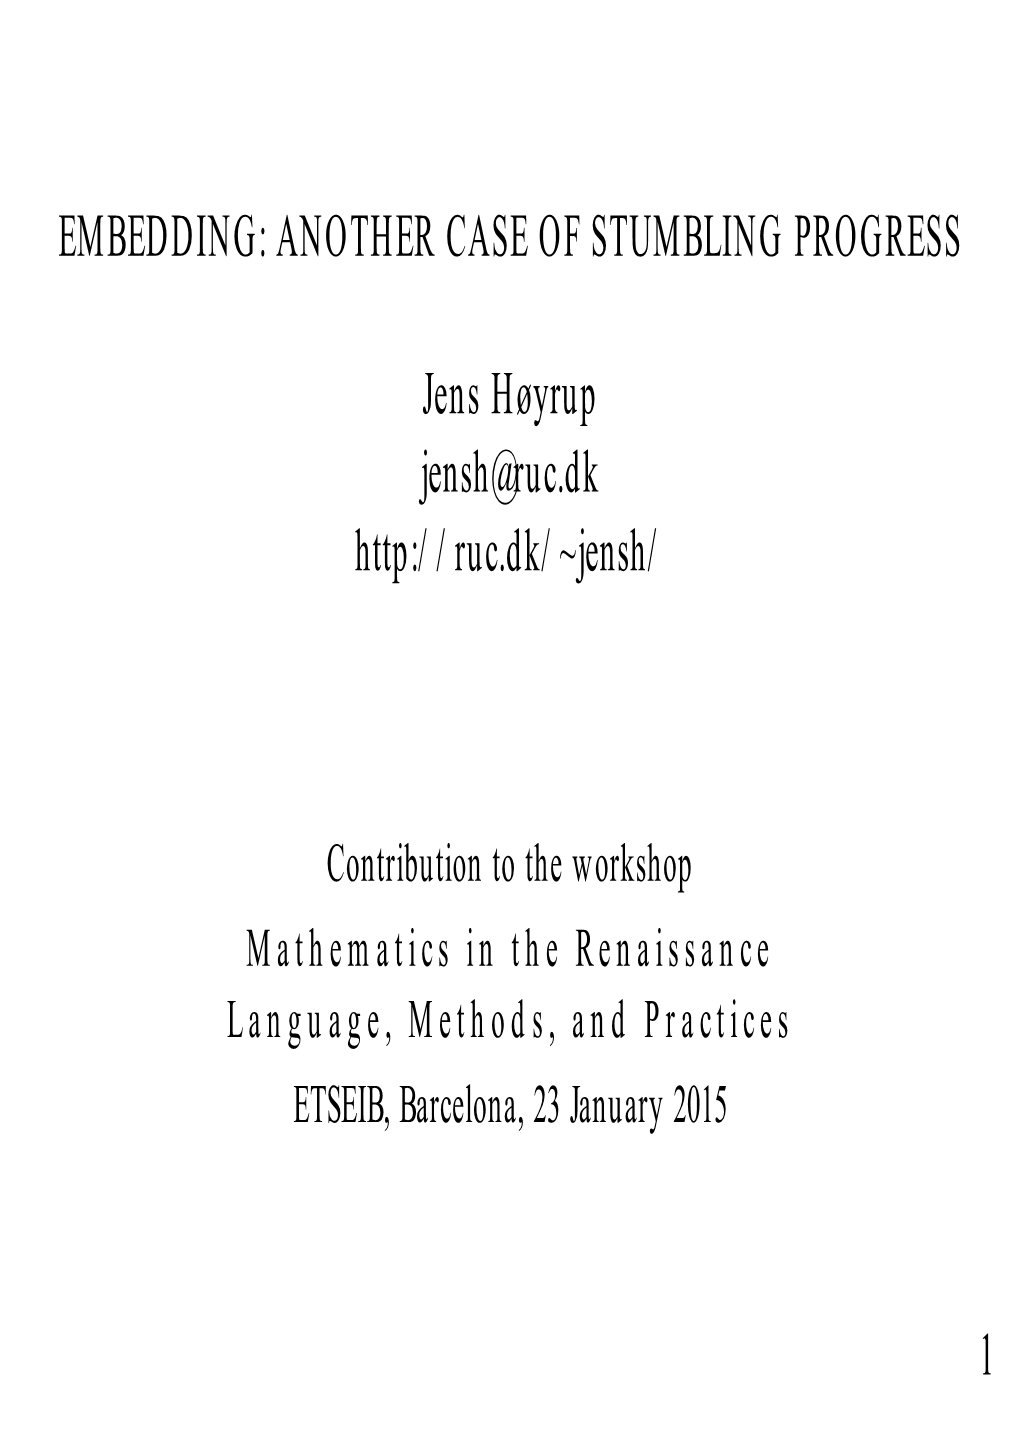 Presentation Embedding--Another Case of Stumbling Progress